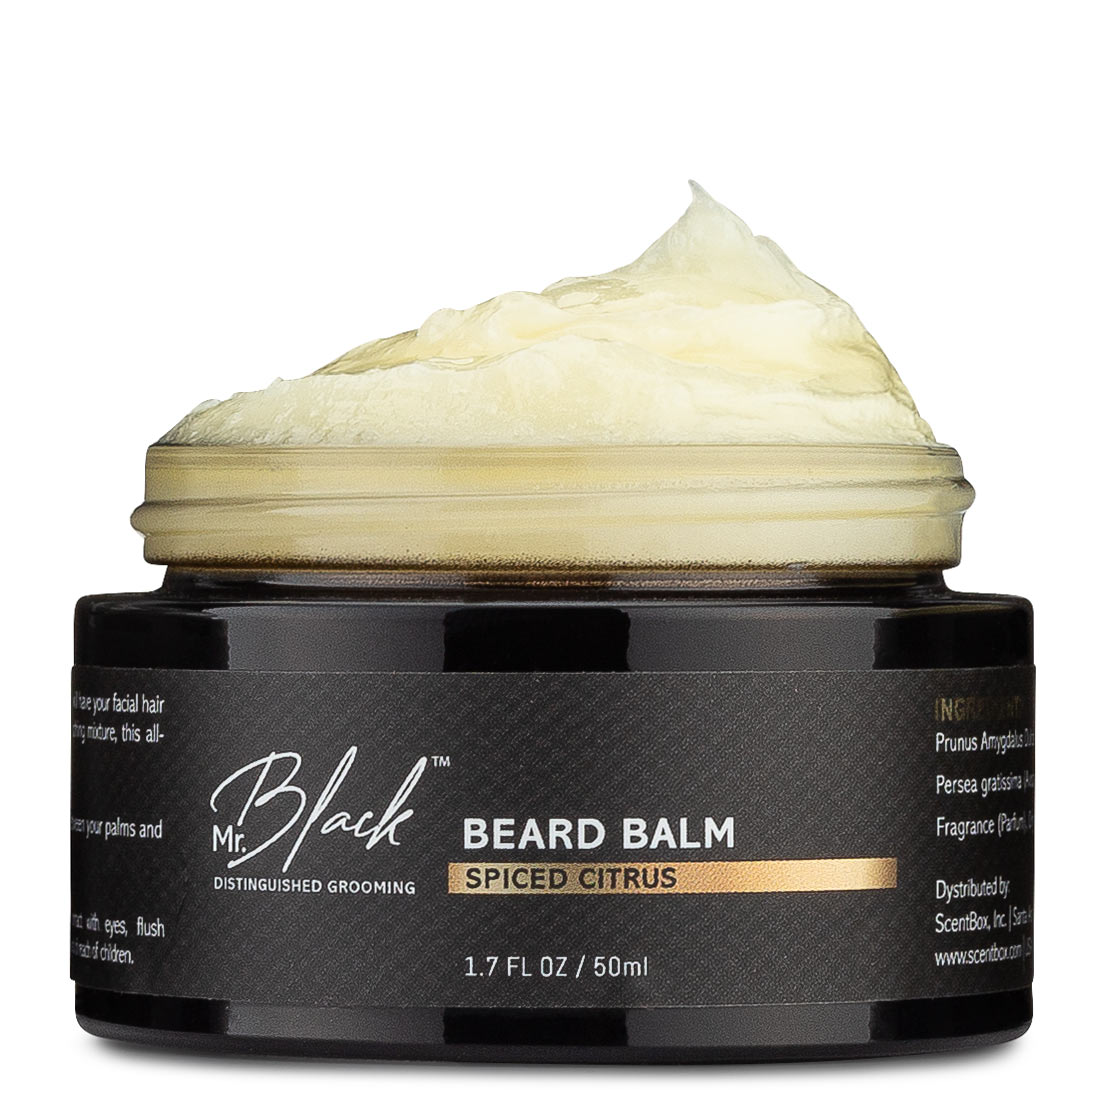 Beard Balm - Spiced Citrus Mr. Black Image